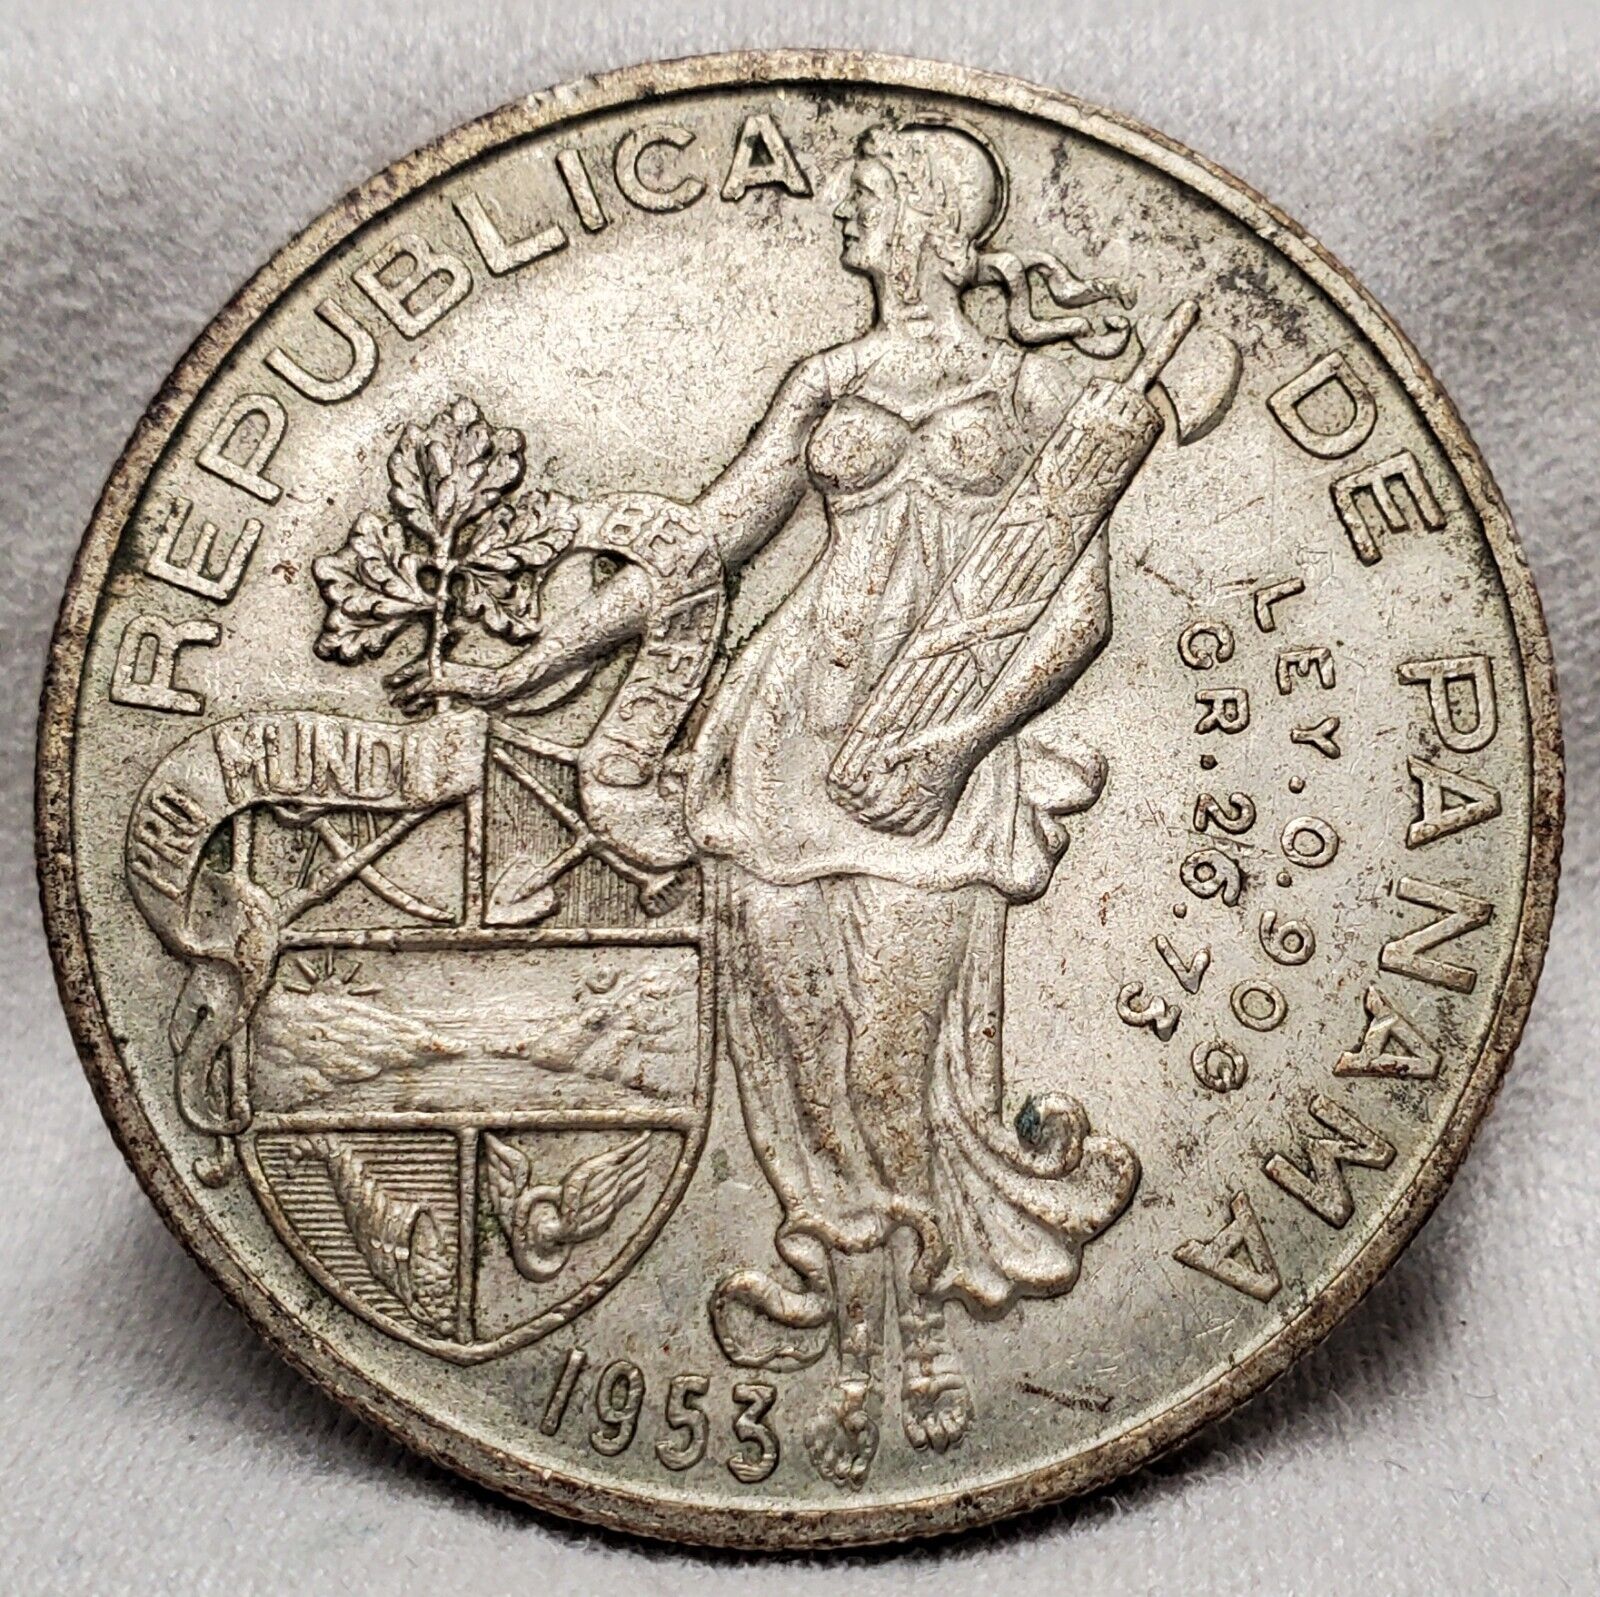 1953 Panama Balboa Large World Silver Coin Xf Low Mintage 50k